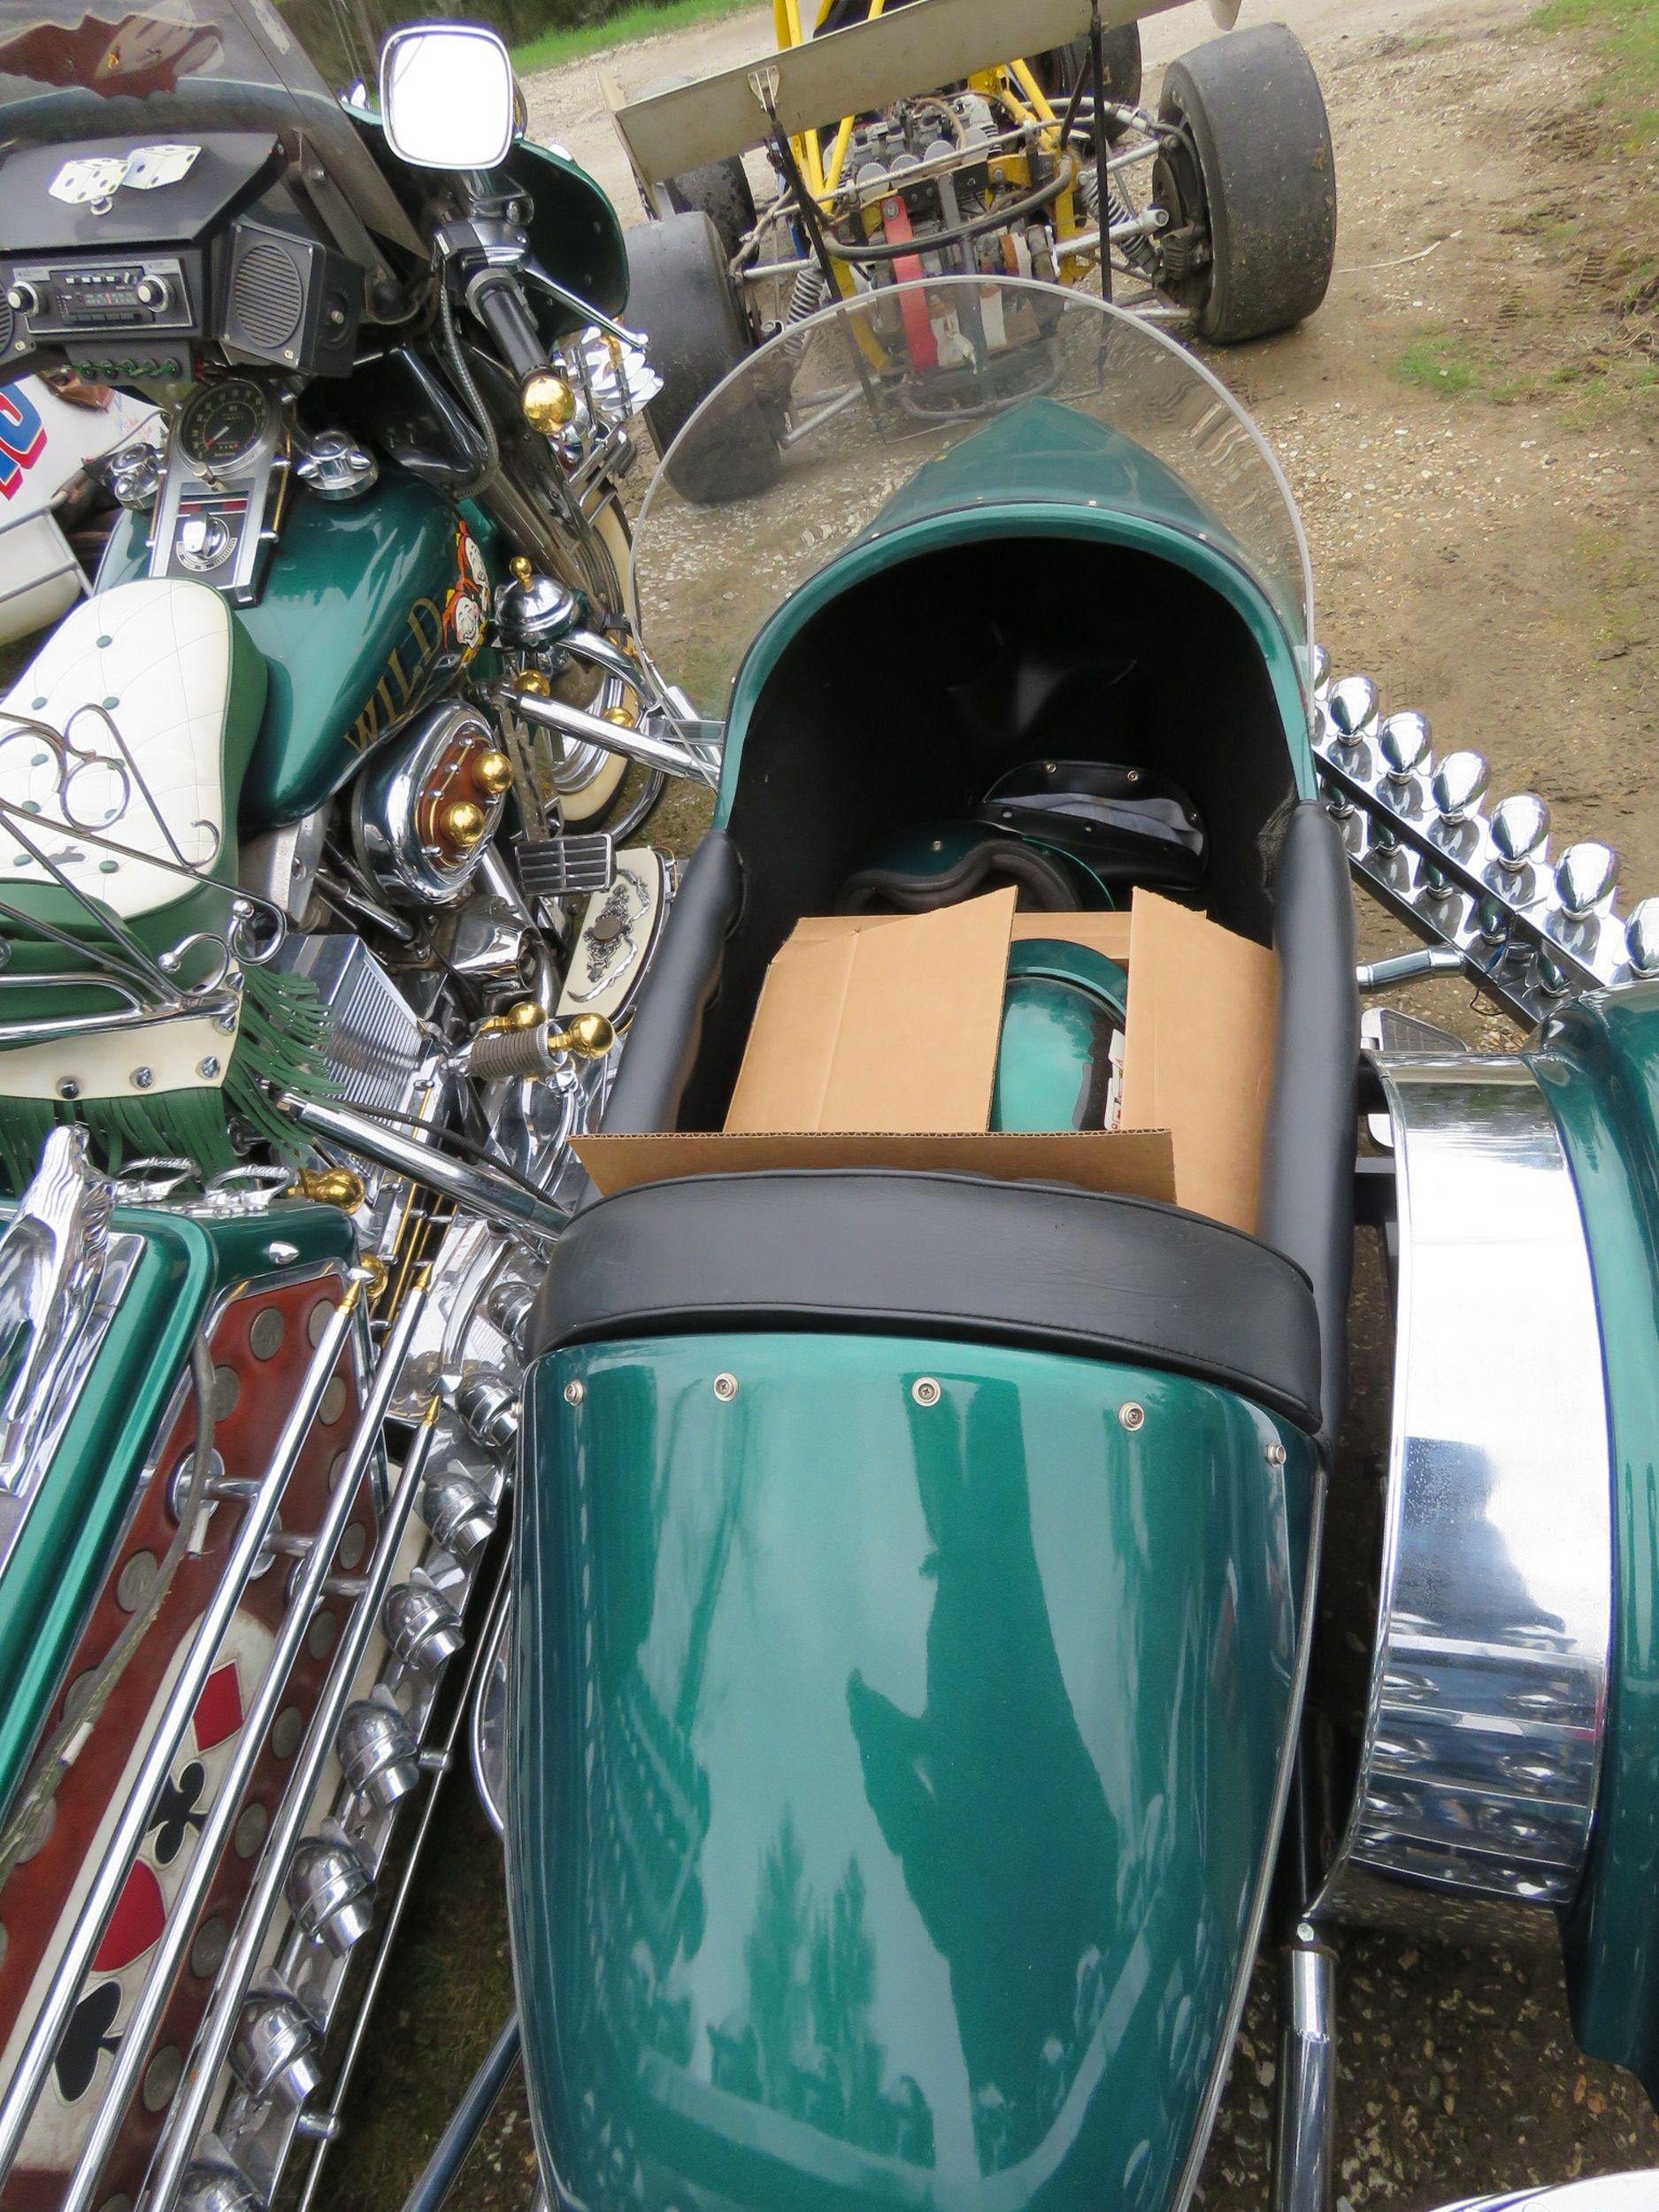 1976 FLH Harley Davidson Custom Motorcycle "The Joker"